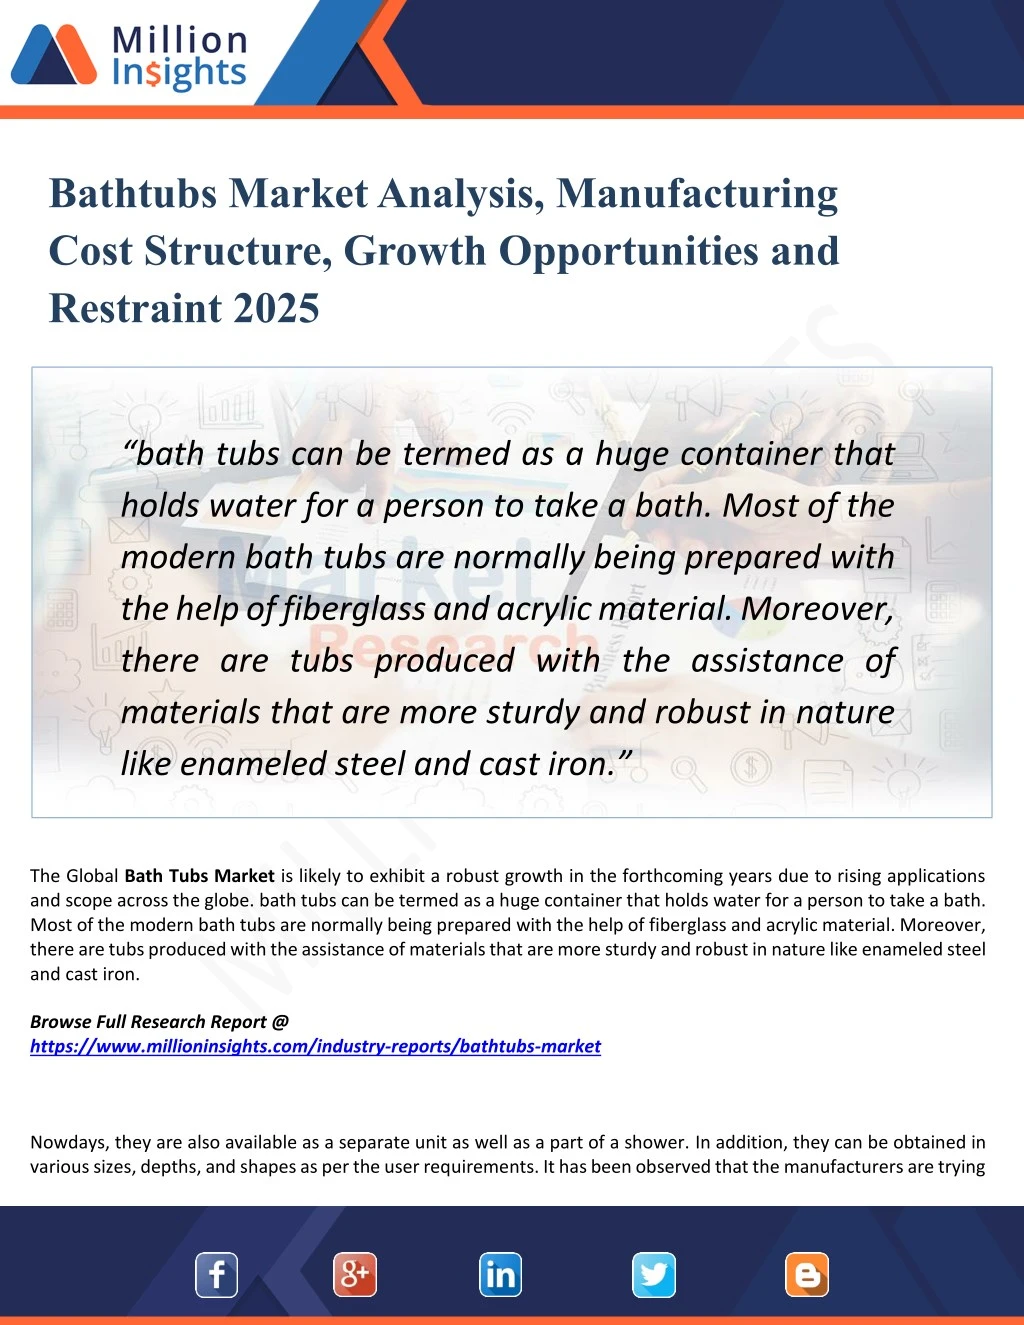 bathtubs market analysis manufacturing cost